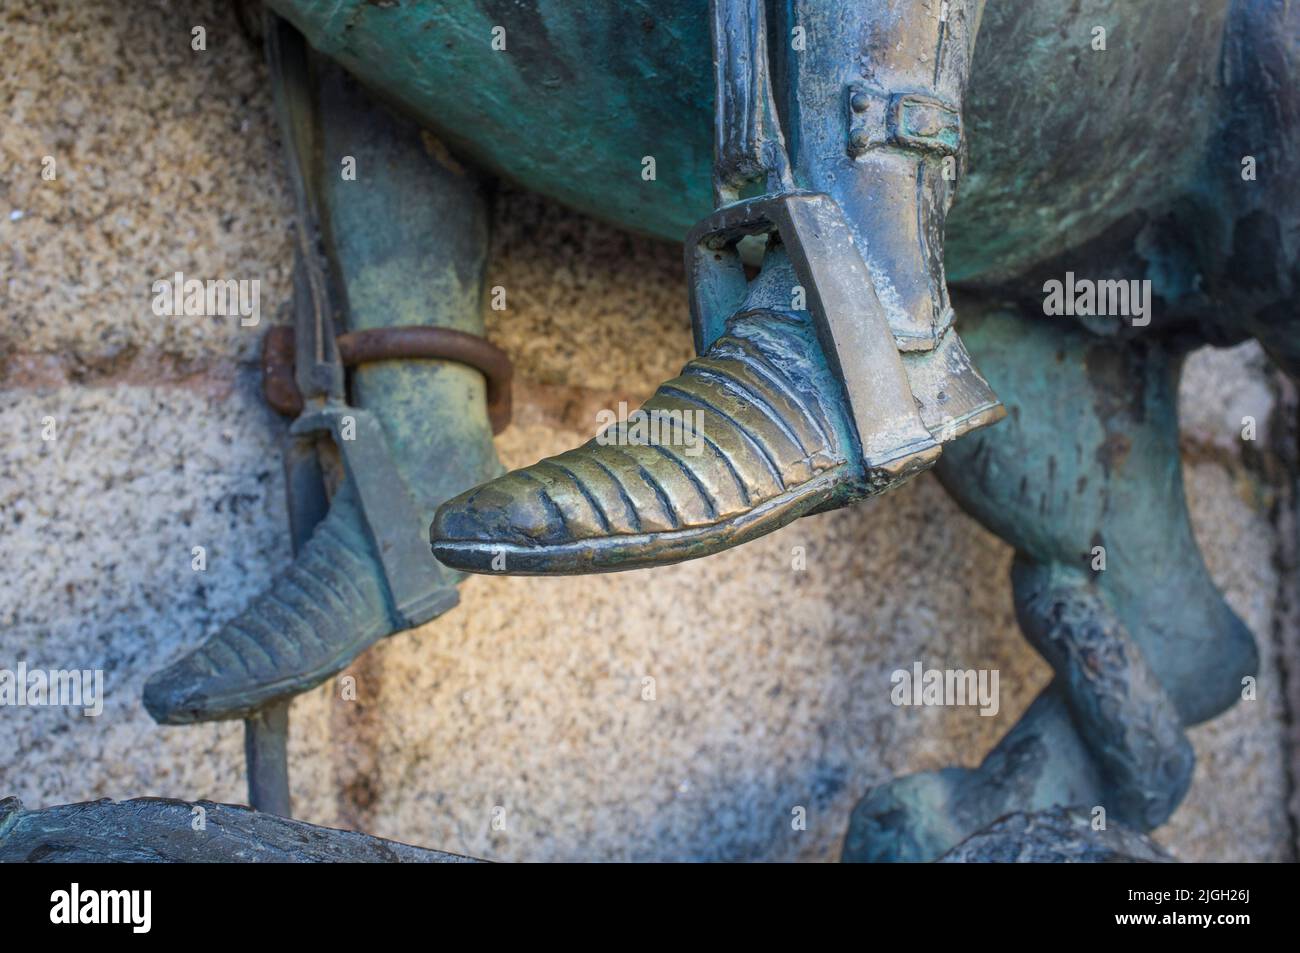 Pies en estribo de San Jorge. Escultura en bronce en Cáceres, España Foto de stock